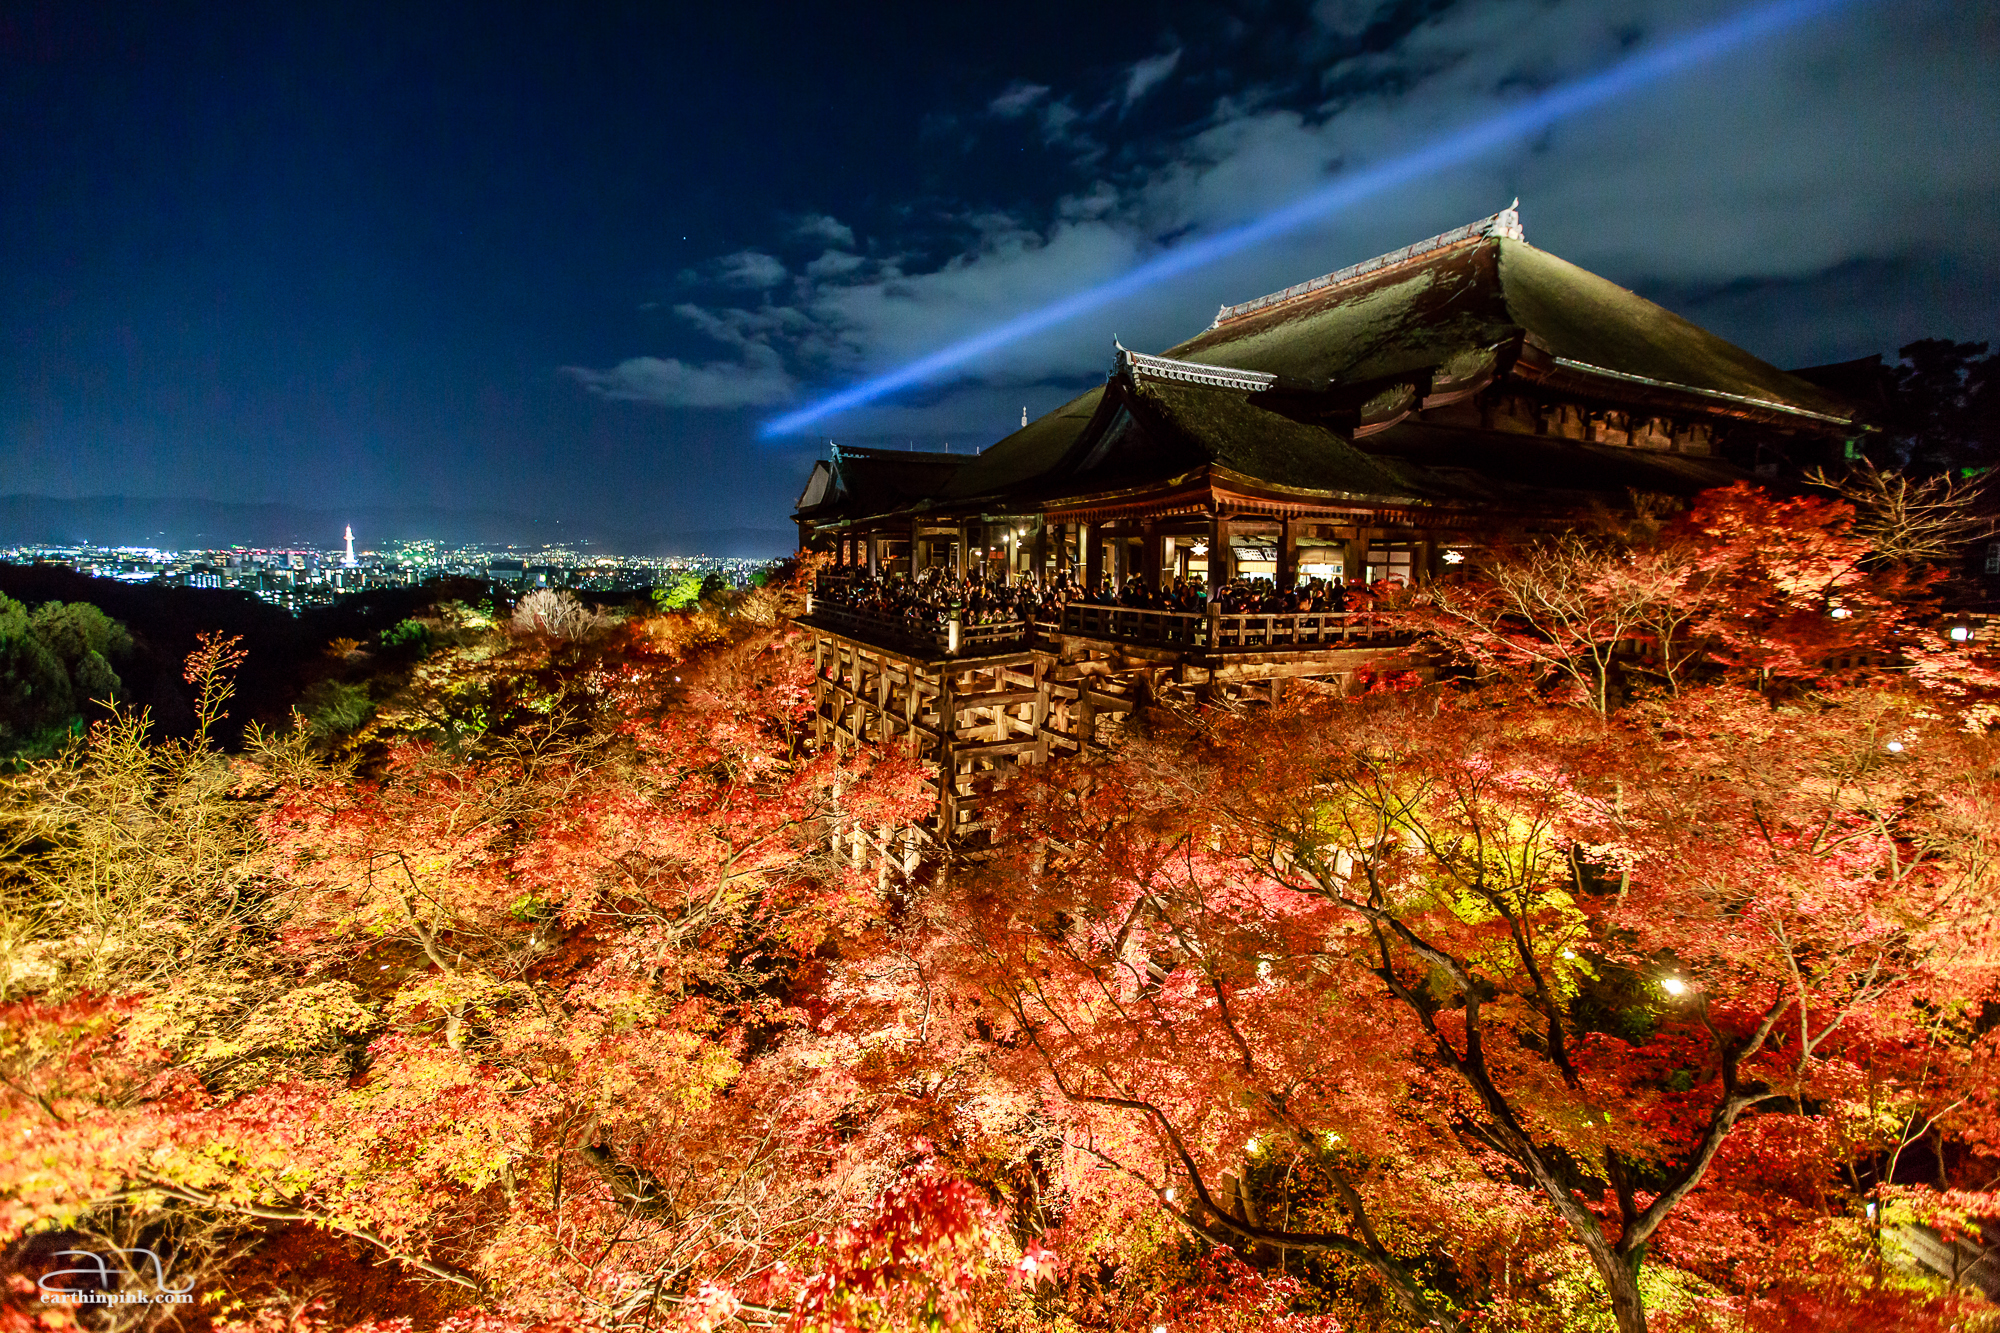 Night illumination at Kiyomizu-dera.